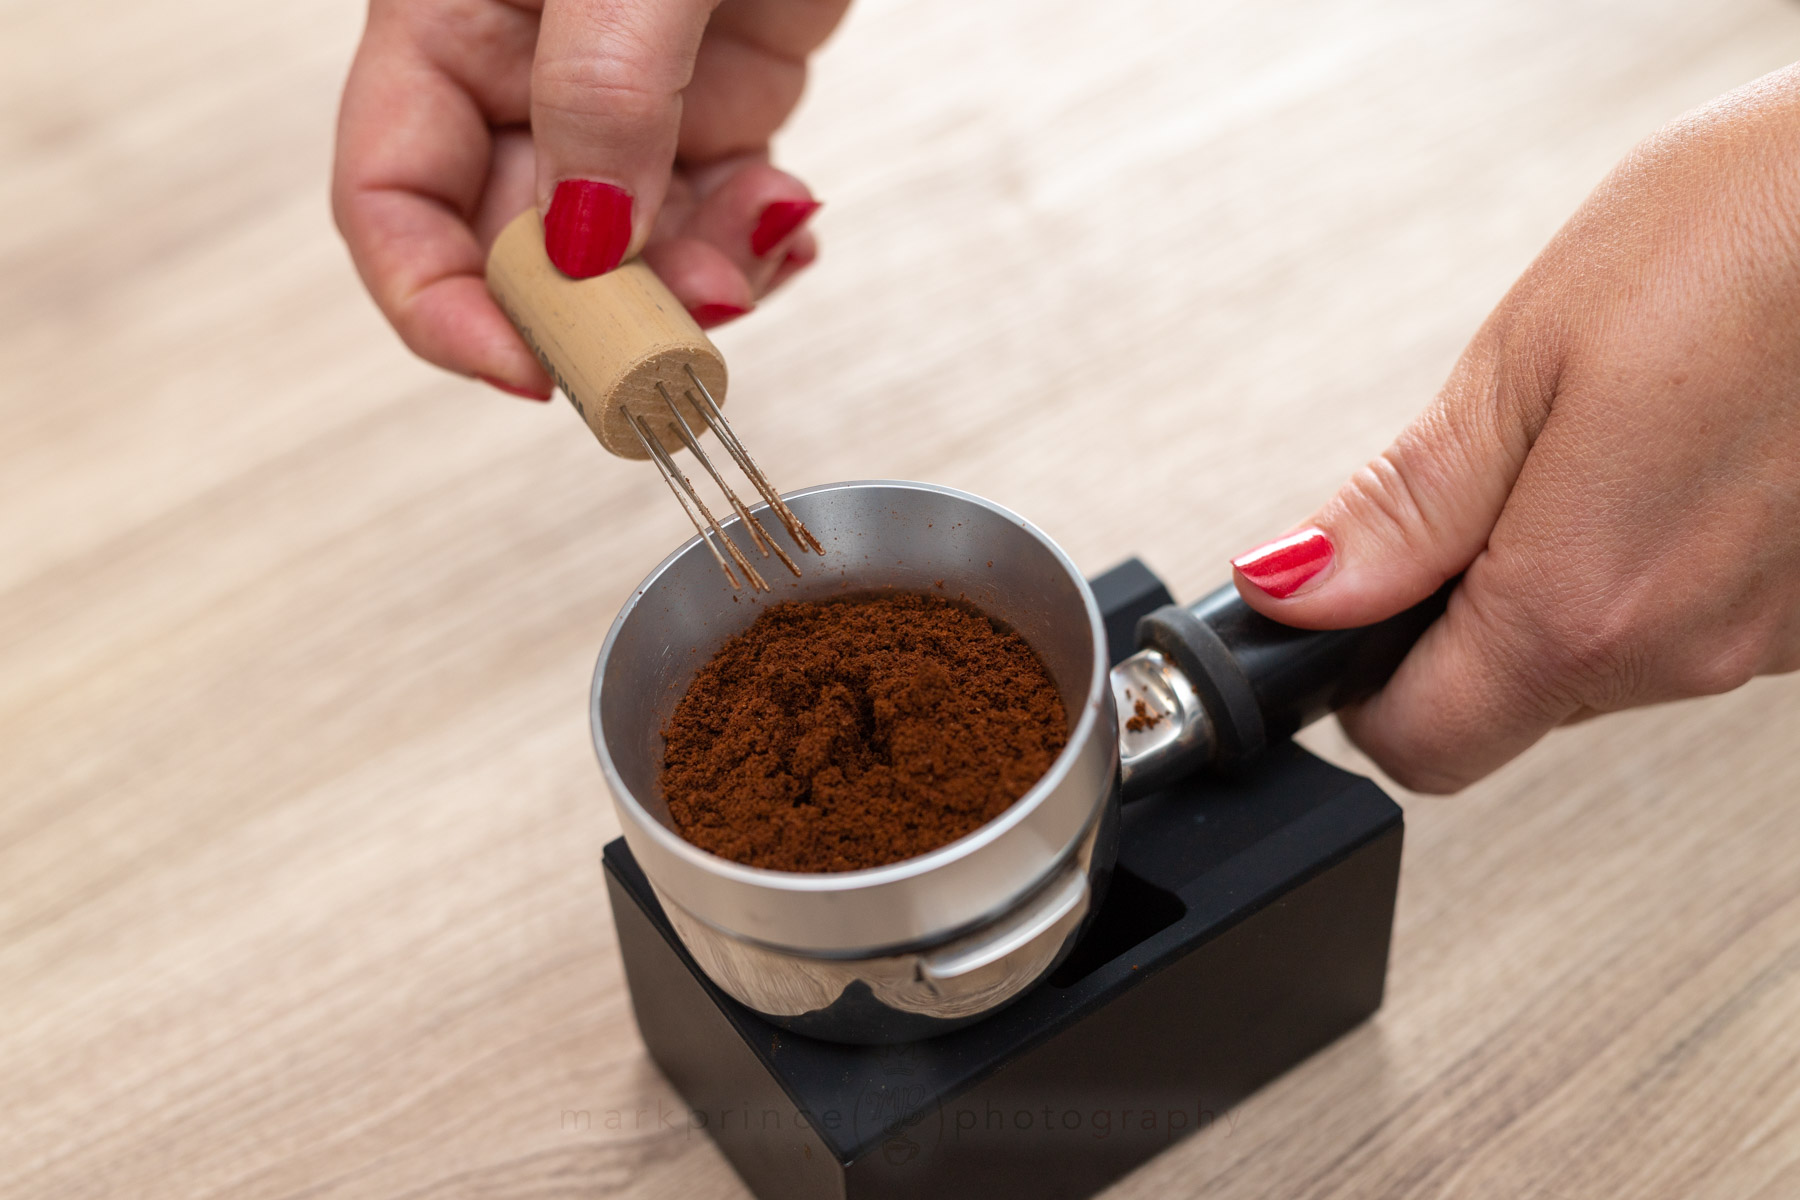 Using a cork to stir ground coffee